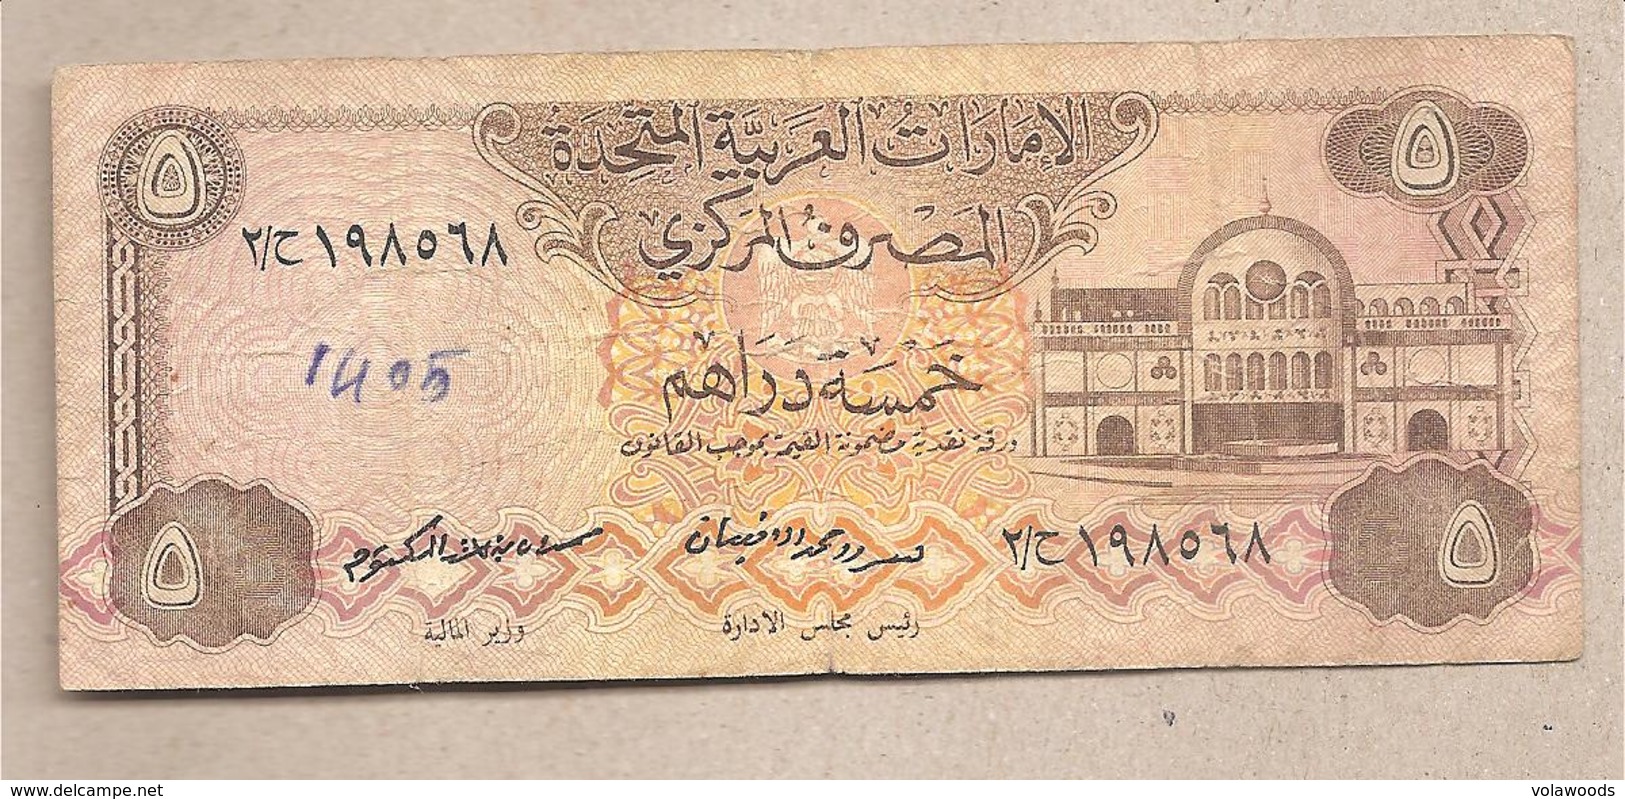 Emirati Arabi Uniti - Banconota Circolata Da 5 Dirhams P-7a - 1982 - Emirats Arabes Unis